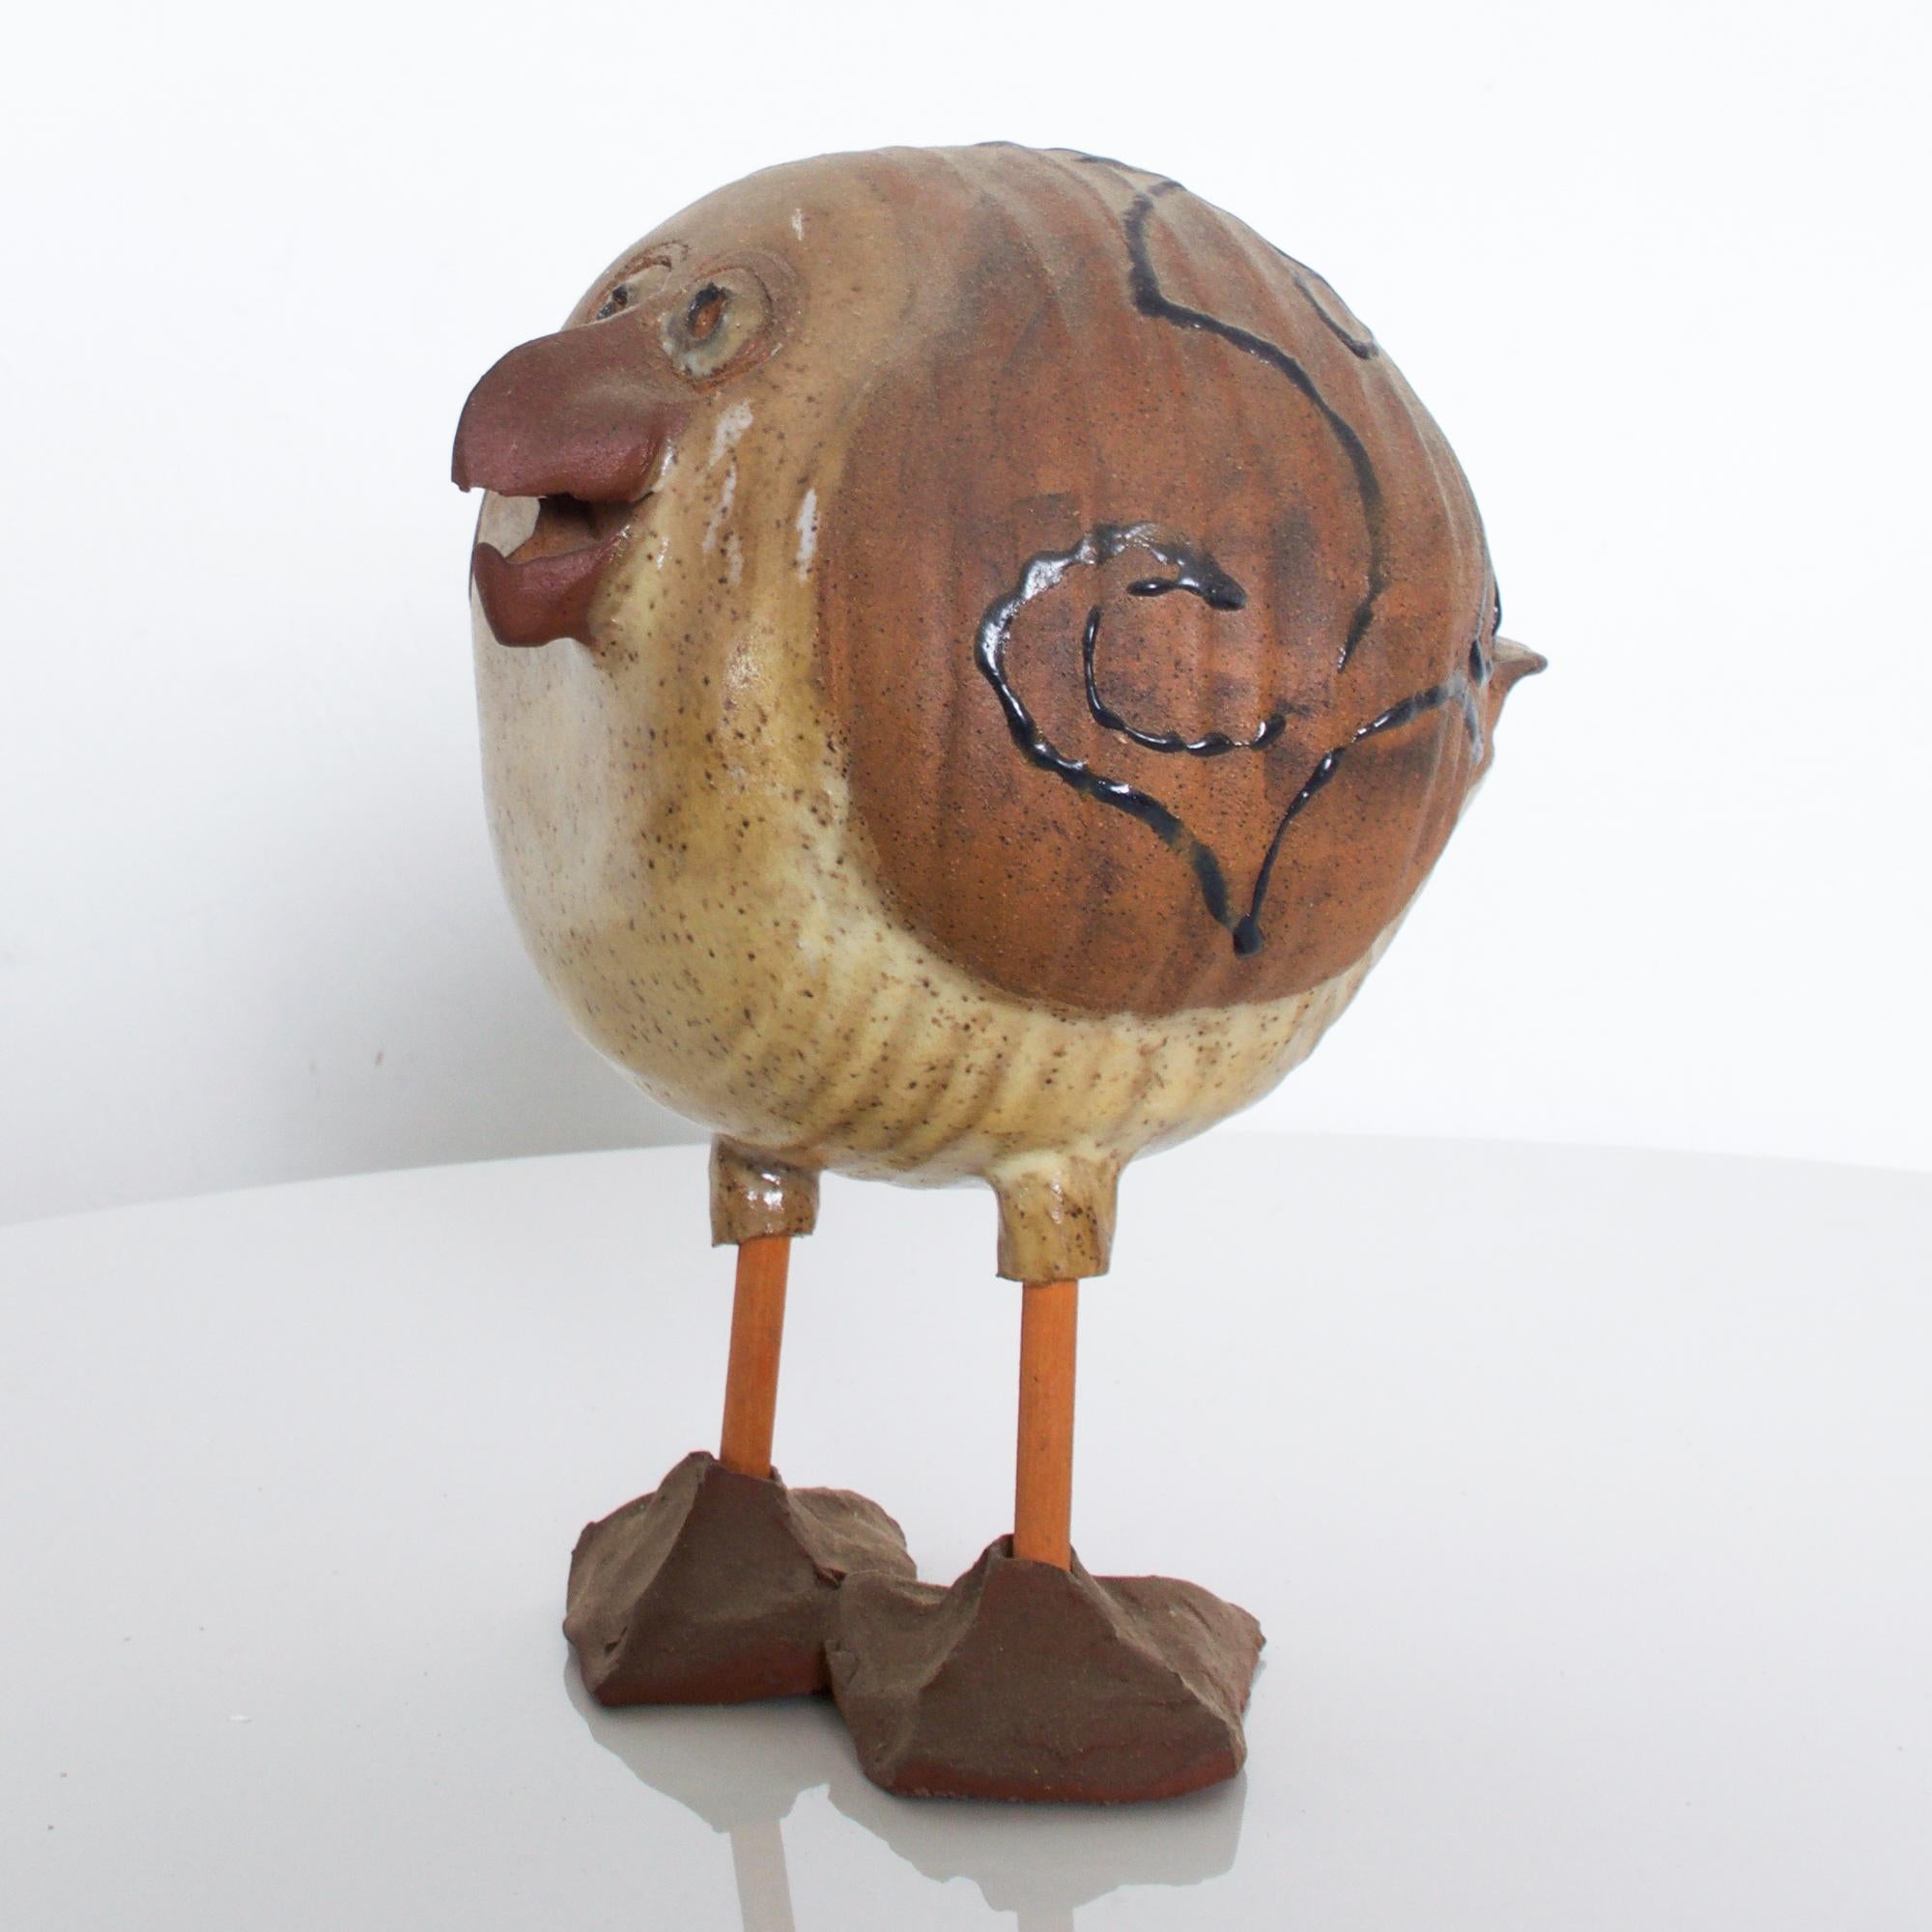 Susan Davis Studio art pottery whimsical plump bird seagull sculpture figurine signed on bottom
Adorable art wacky pottery bird with close set eyes.
Measures: 7.5